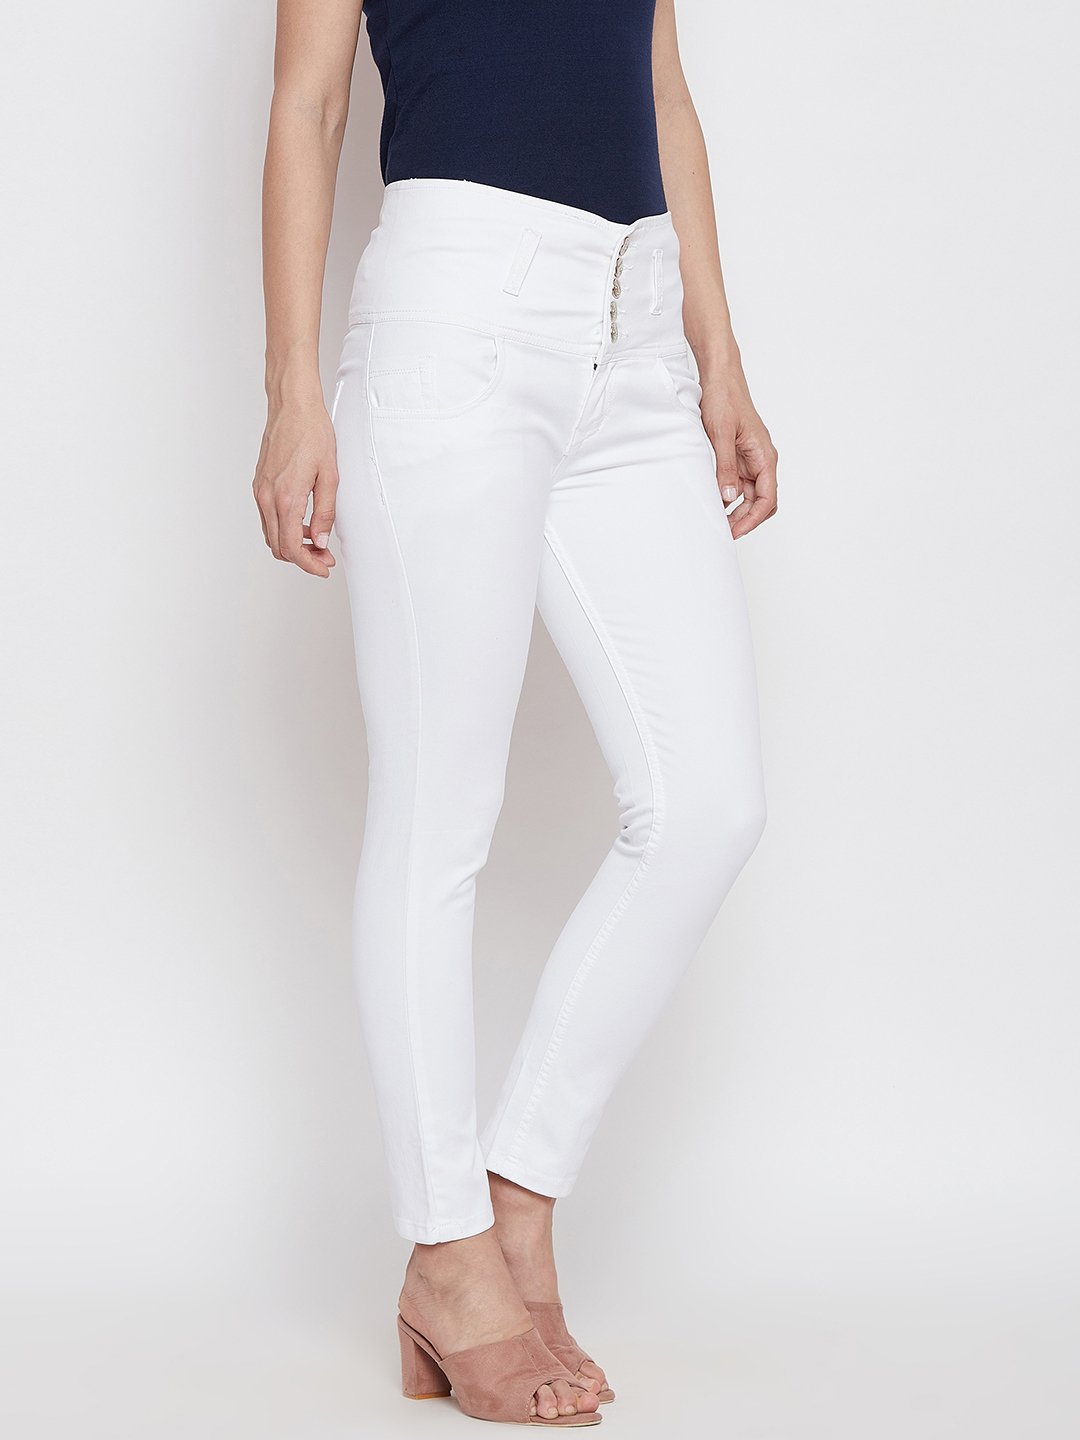 High Waist 5 button White Jeans - NiftyJeans